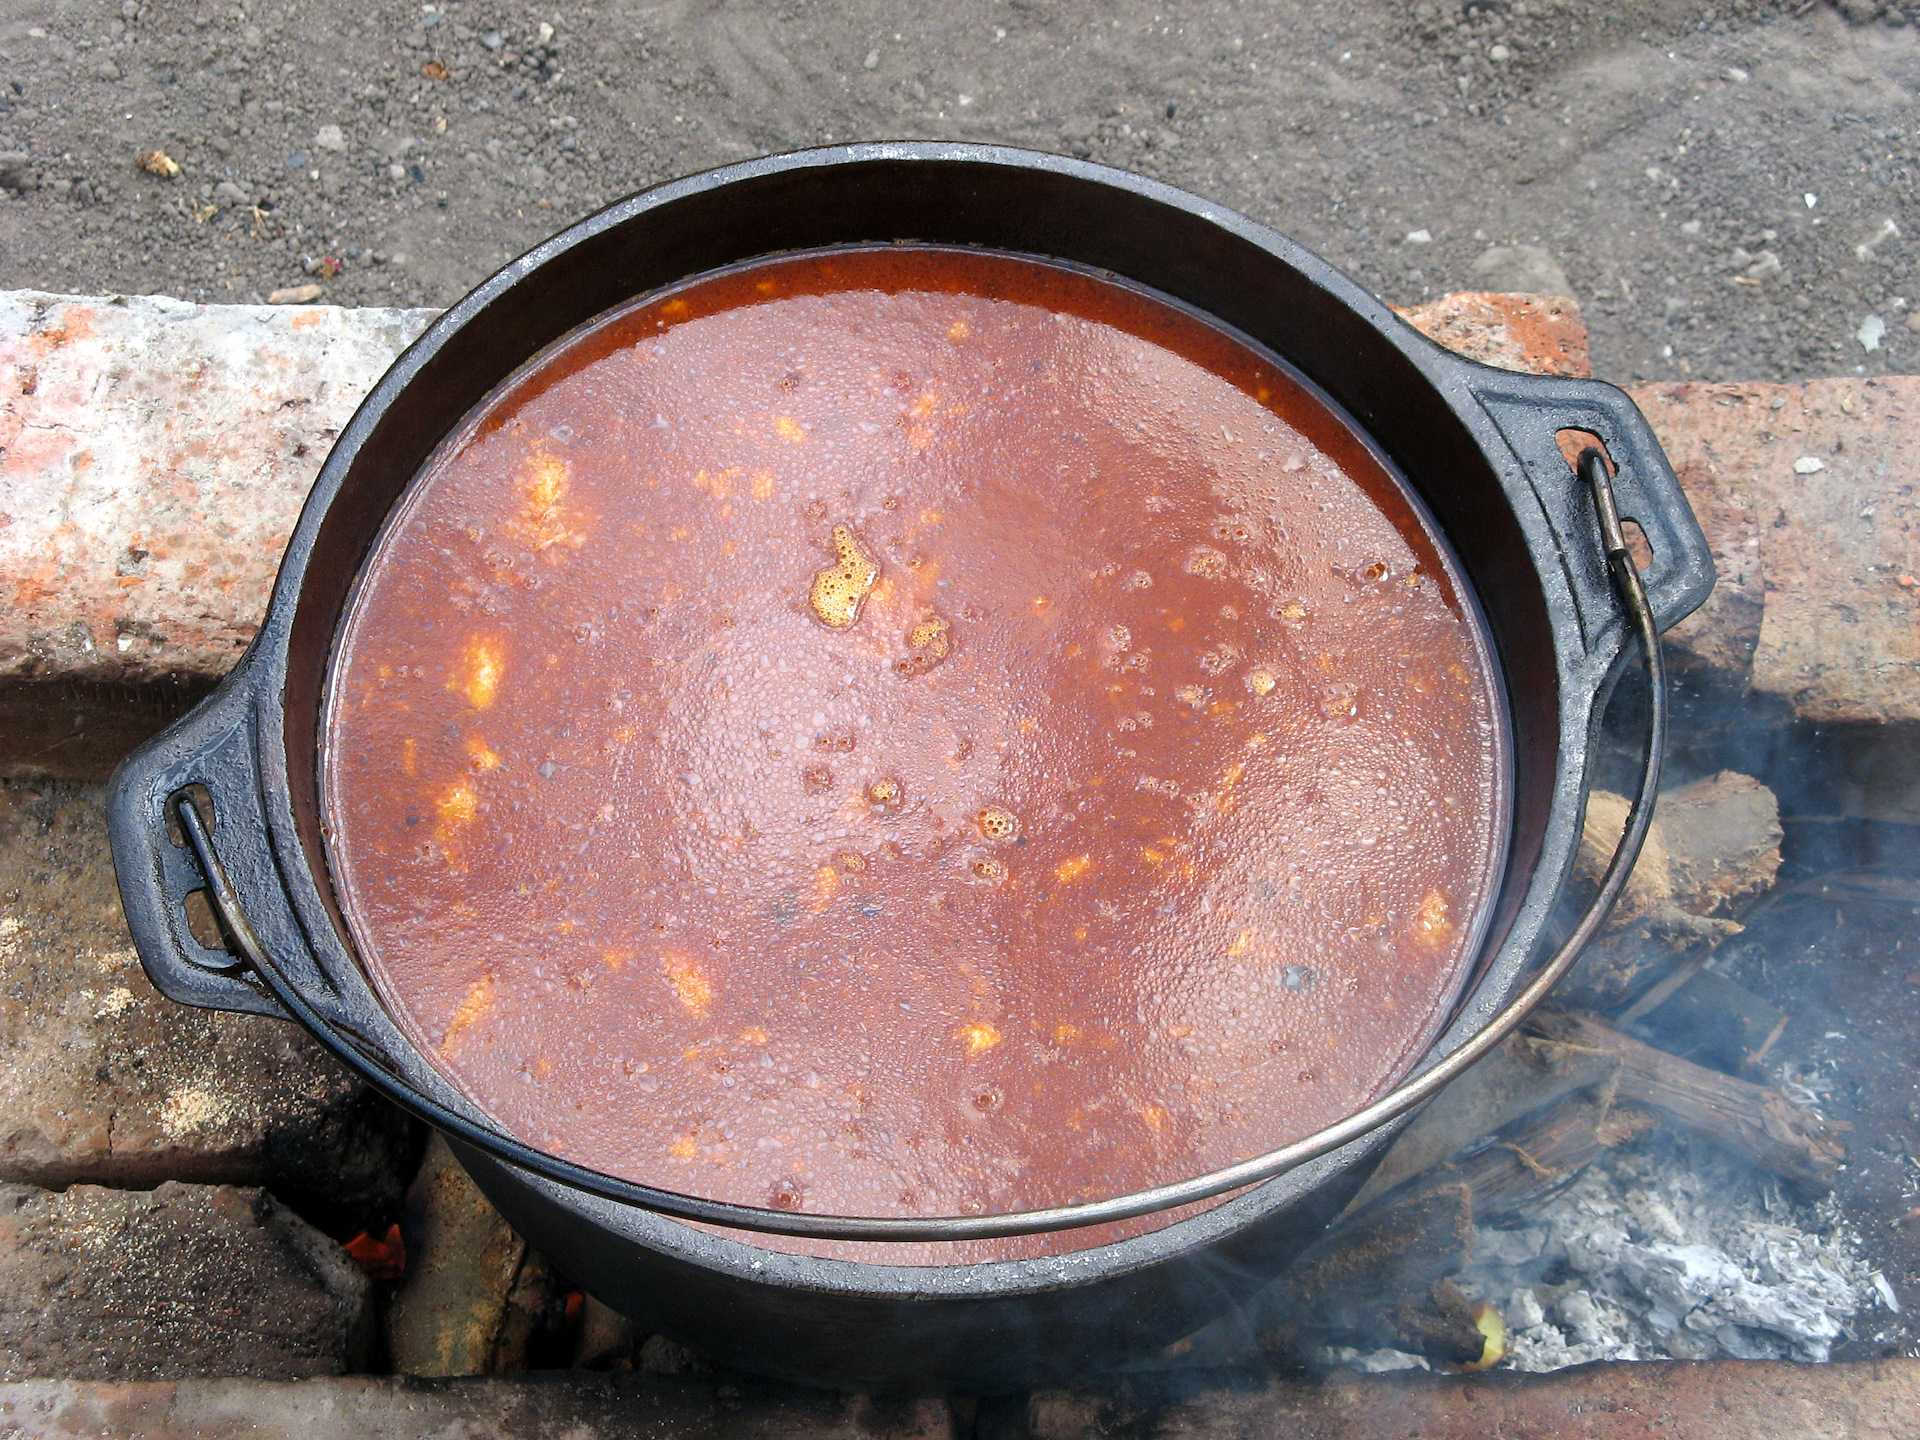 Приготовление супа на костре